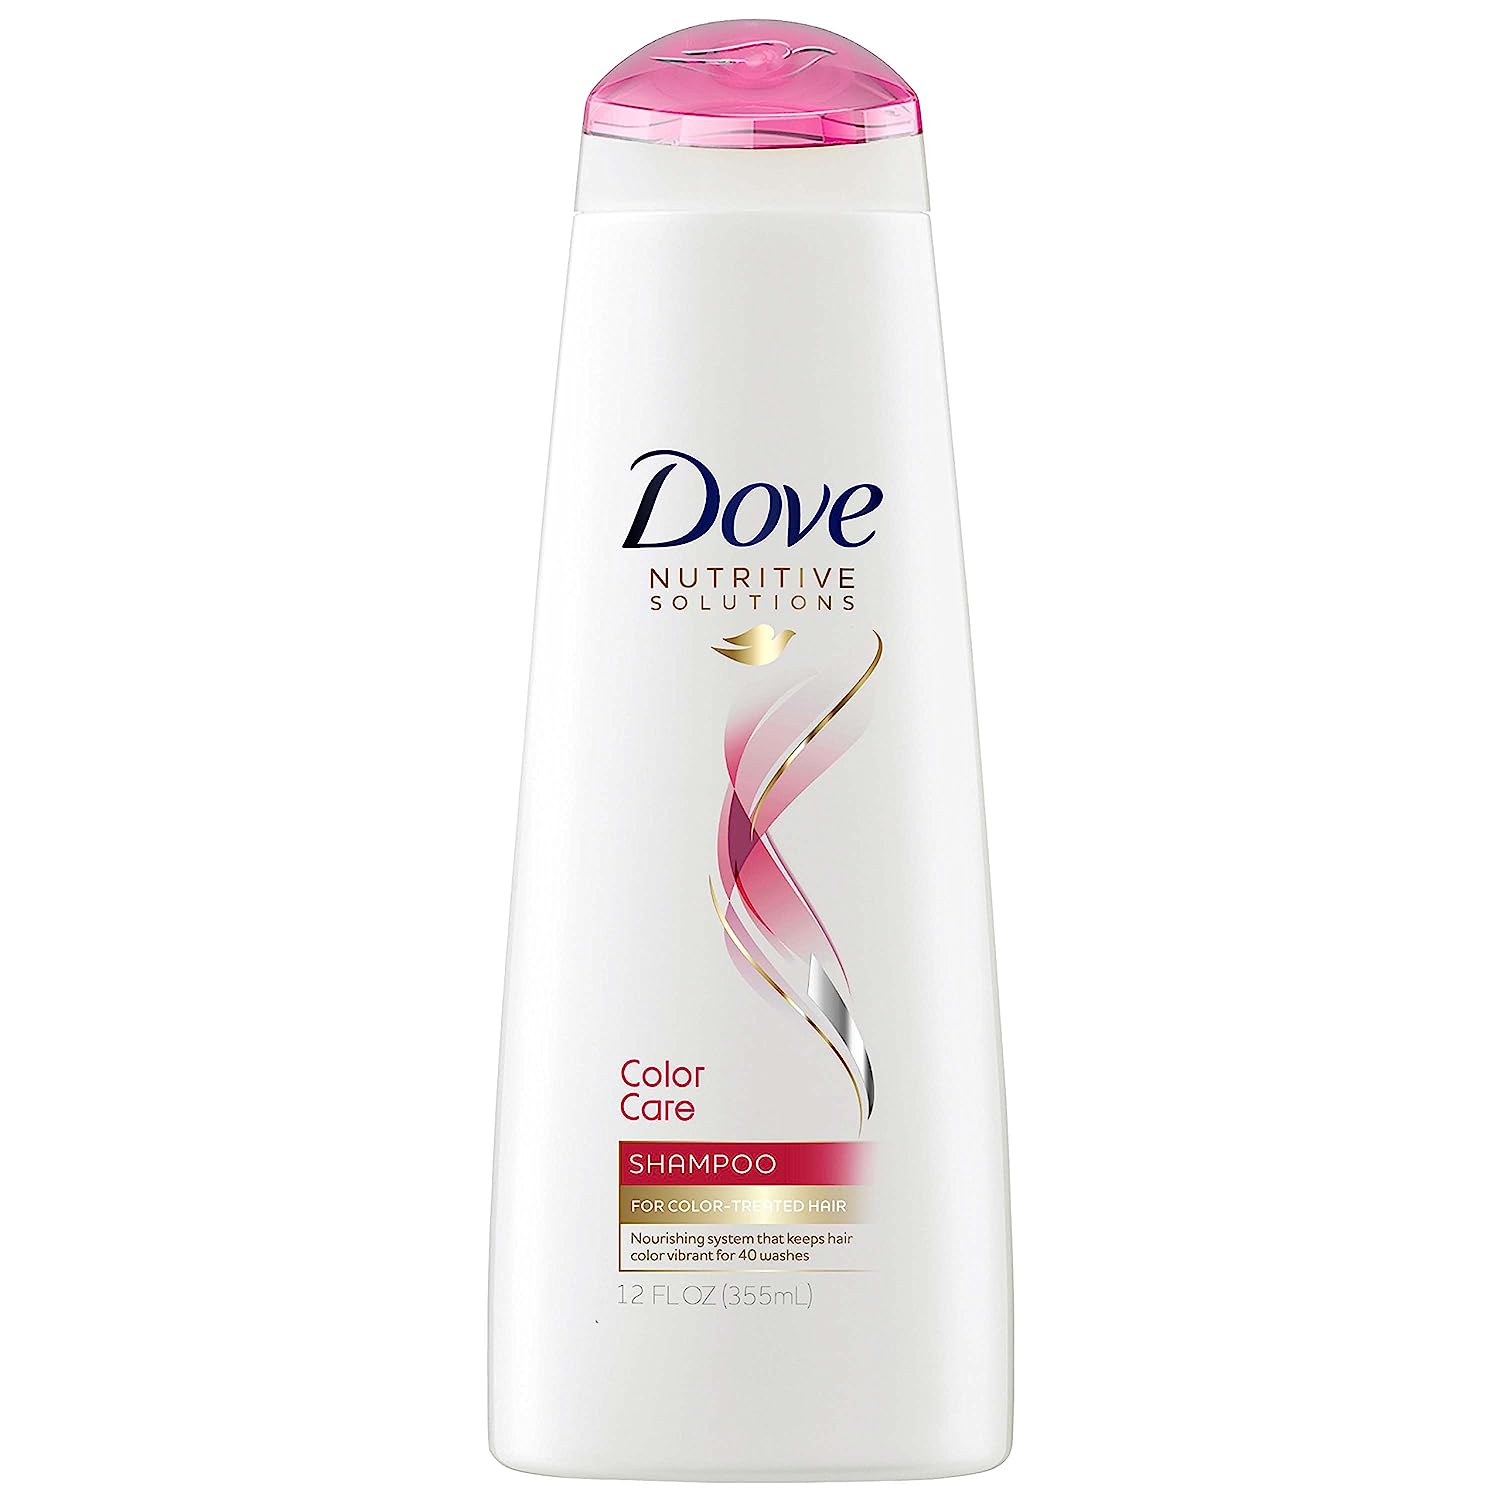 Dove Nutritive Solutions Shampoo Color Care, 12 Fl Oz